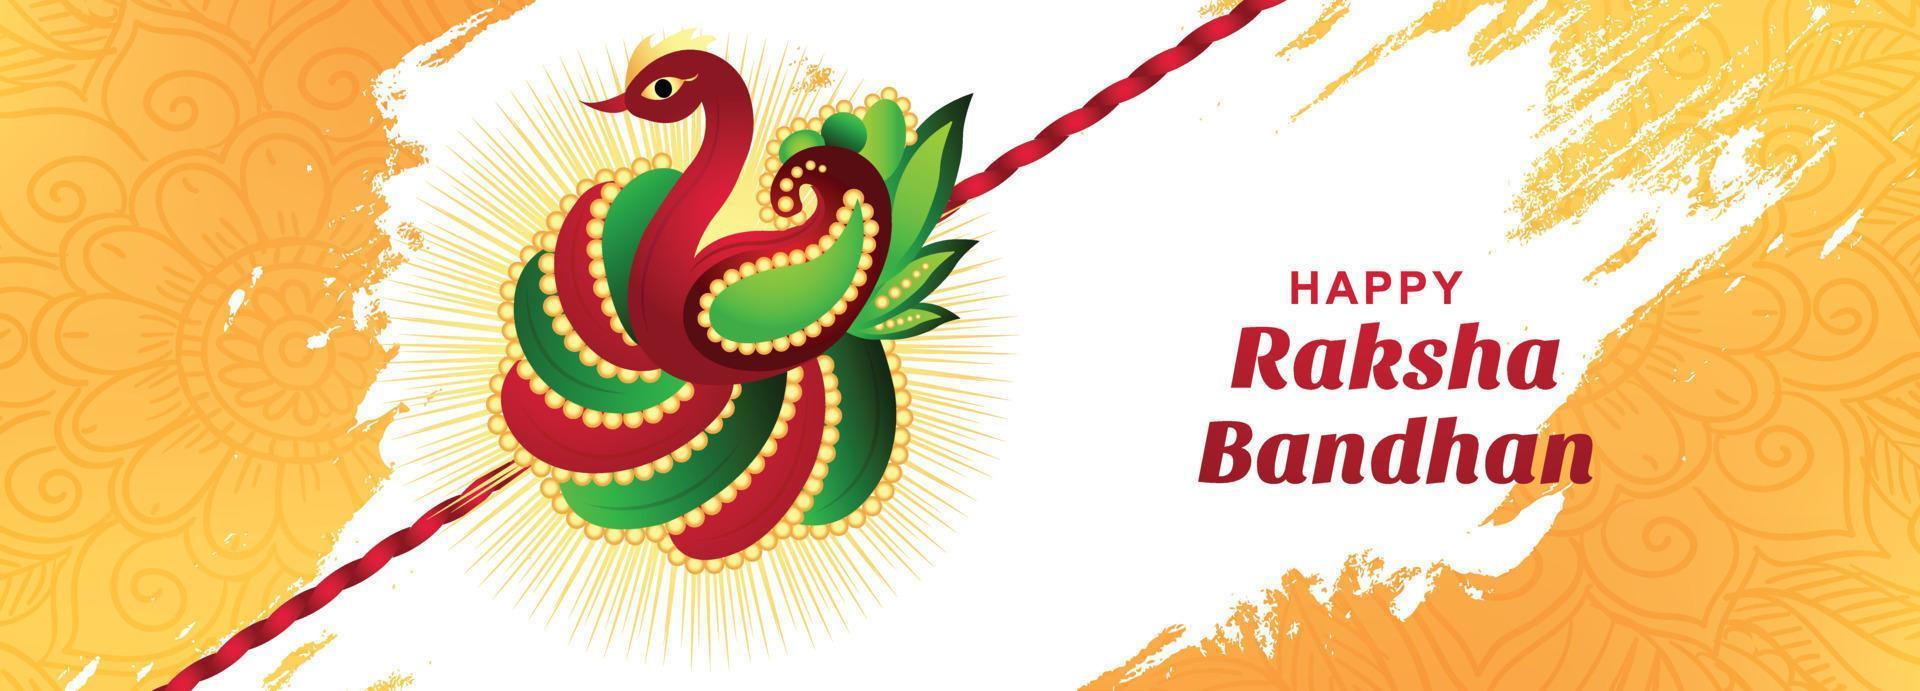 fondo de banner de tarjeta de felicitación de raksha bandhan festival hindú vector